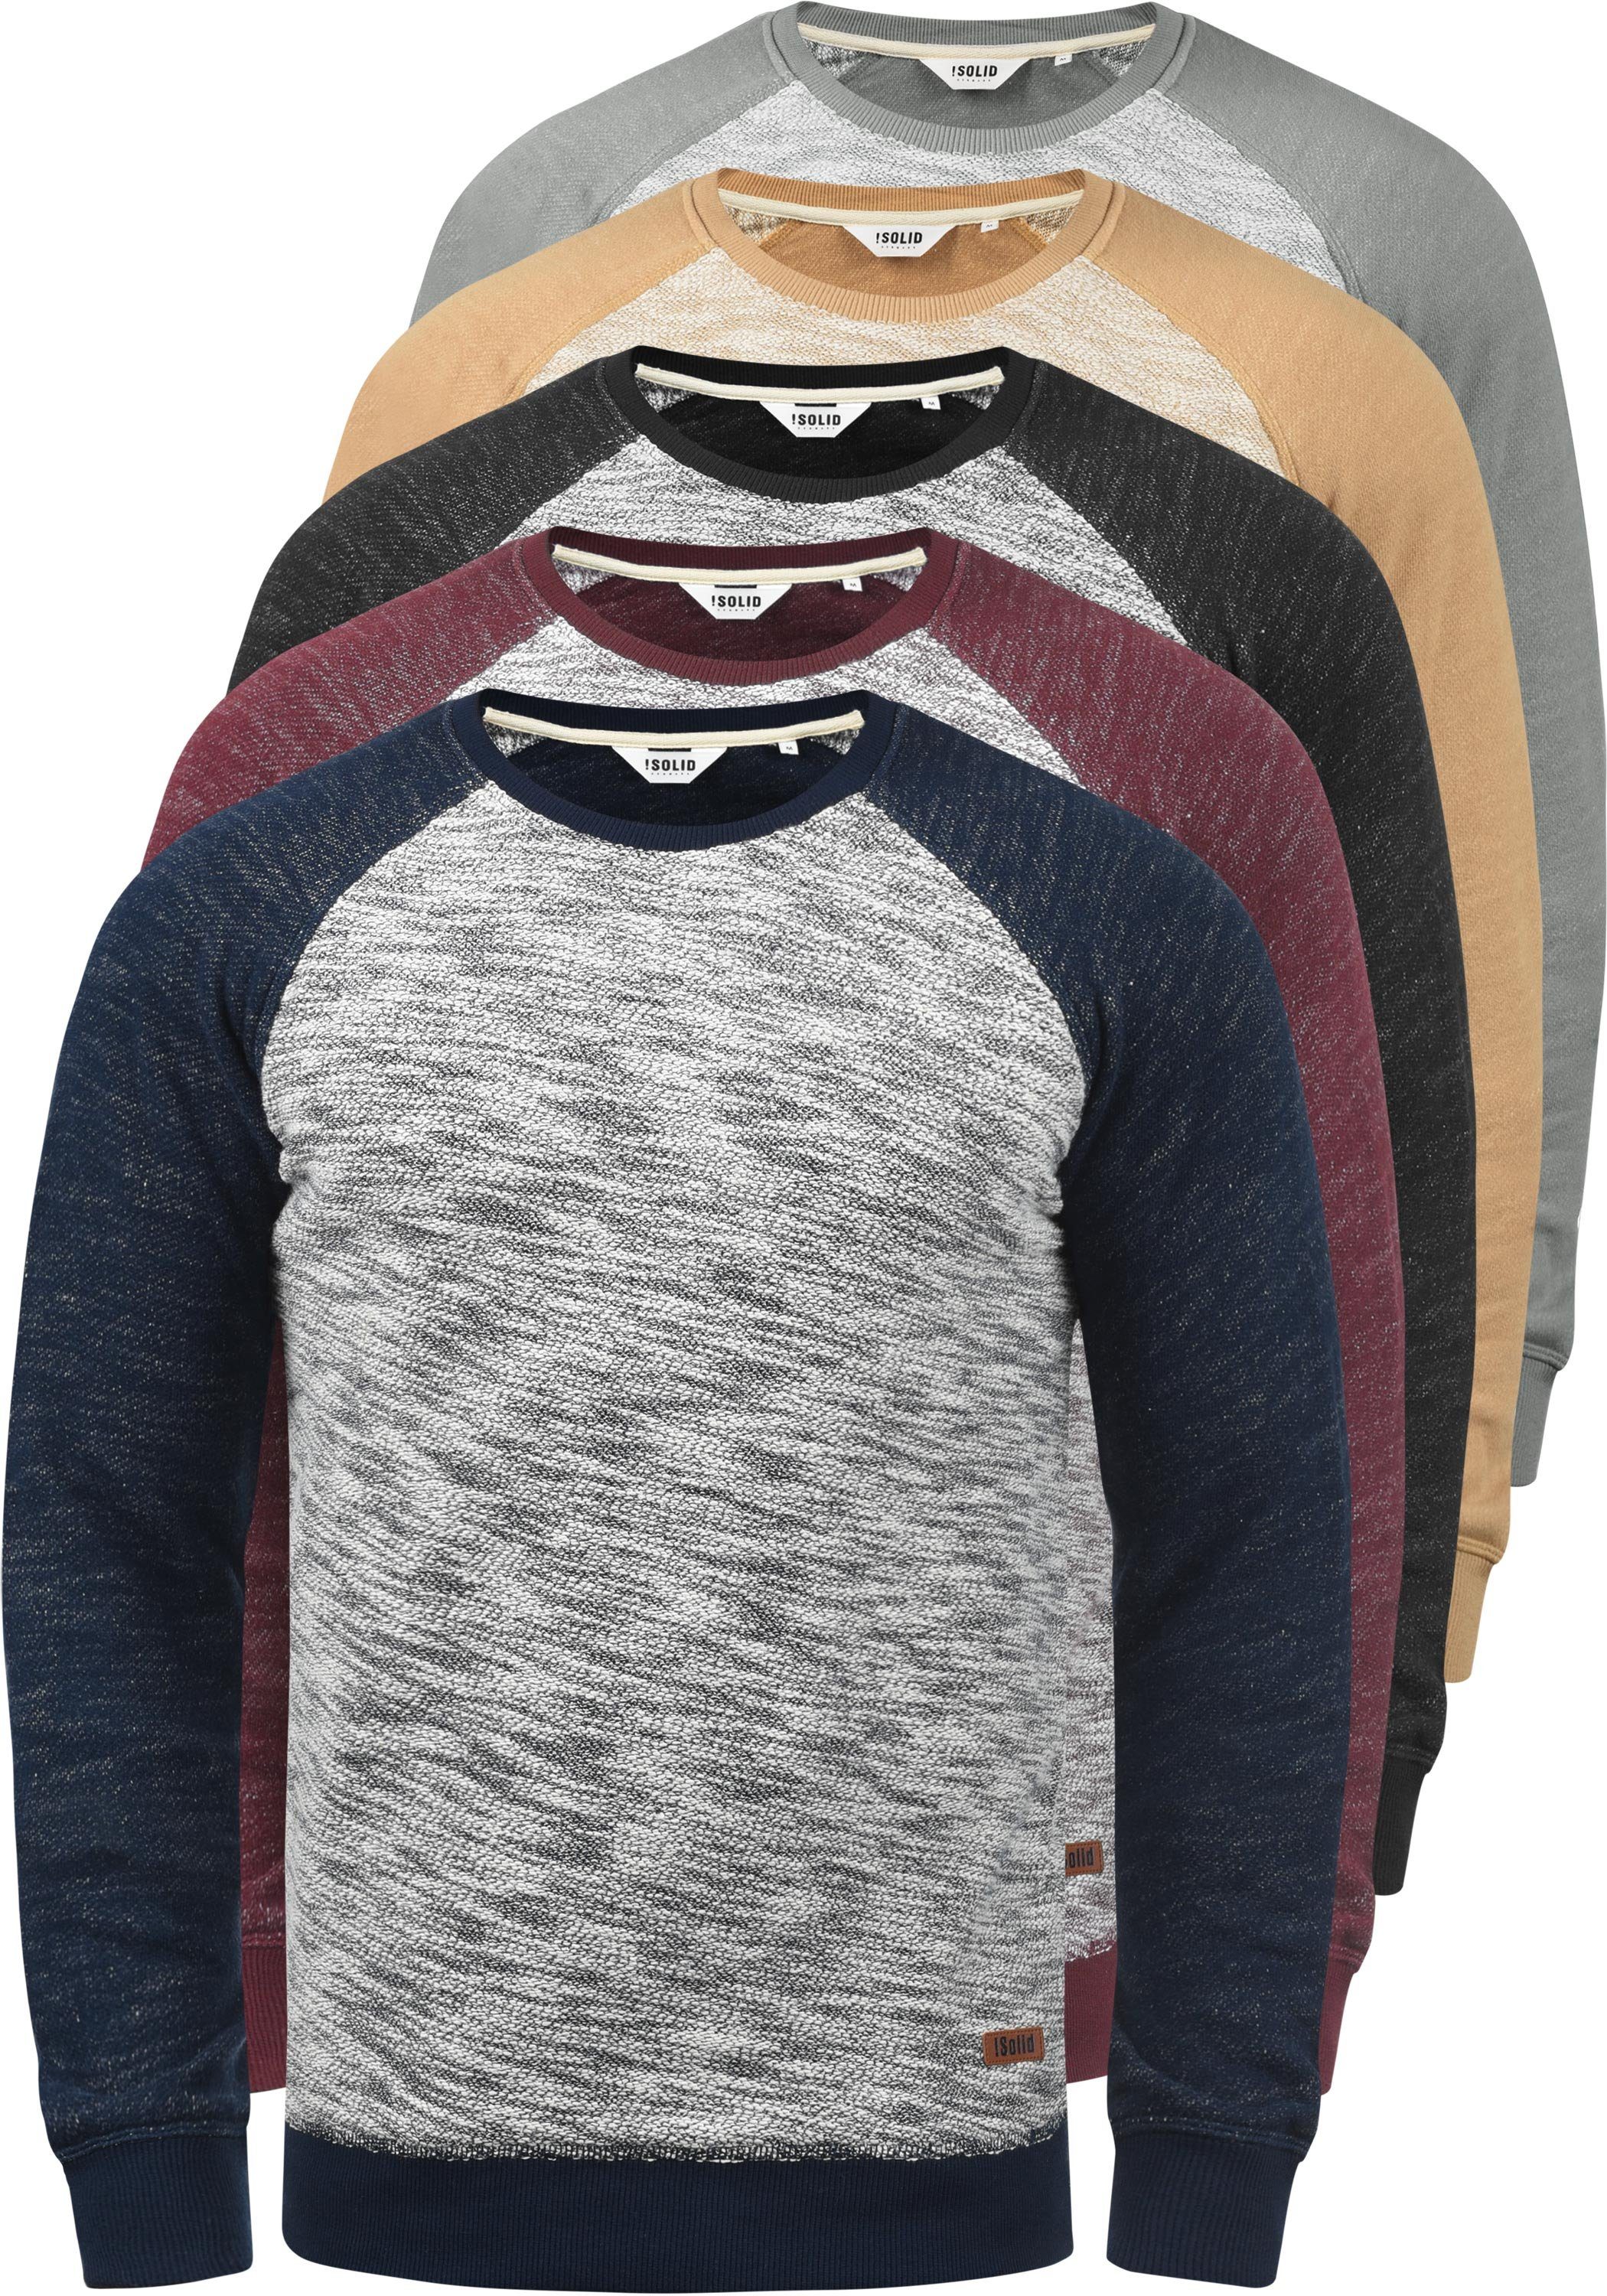 Baseball-Look im Sweatpullover (0985) Wine Red Sweatshirt !Solid SDFlocker